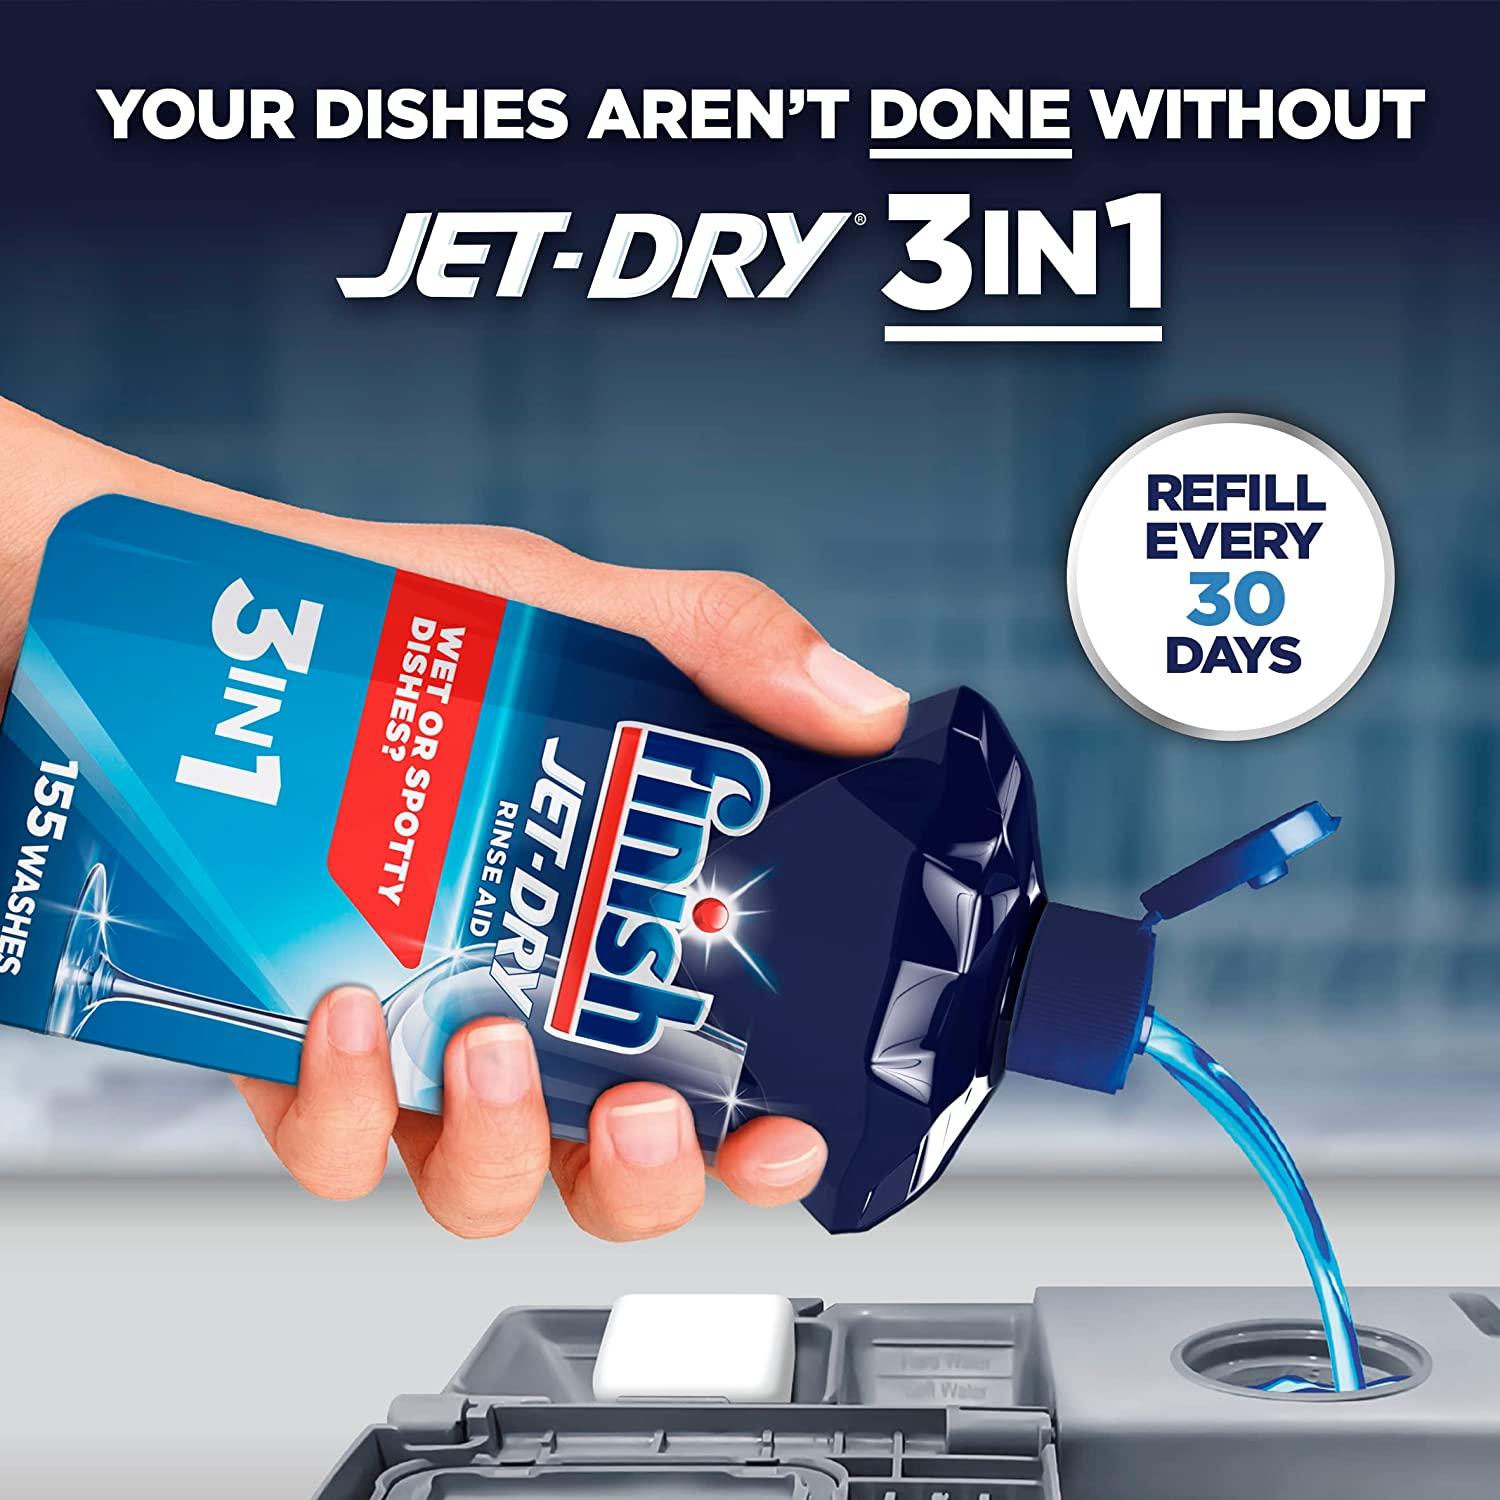 Finish Jet-dry Rinse Aid, Dishwasher Rinse & Drying Agent - 23 Fl